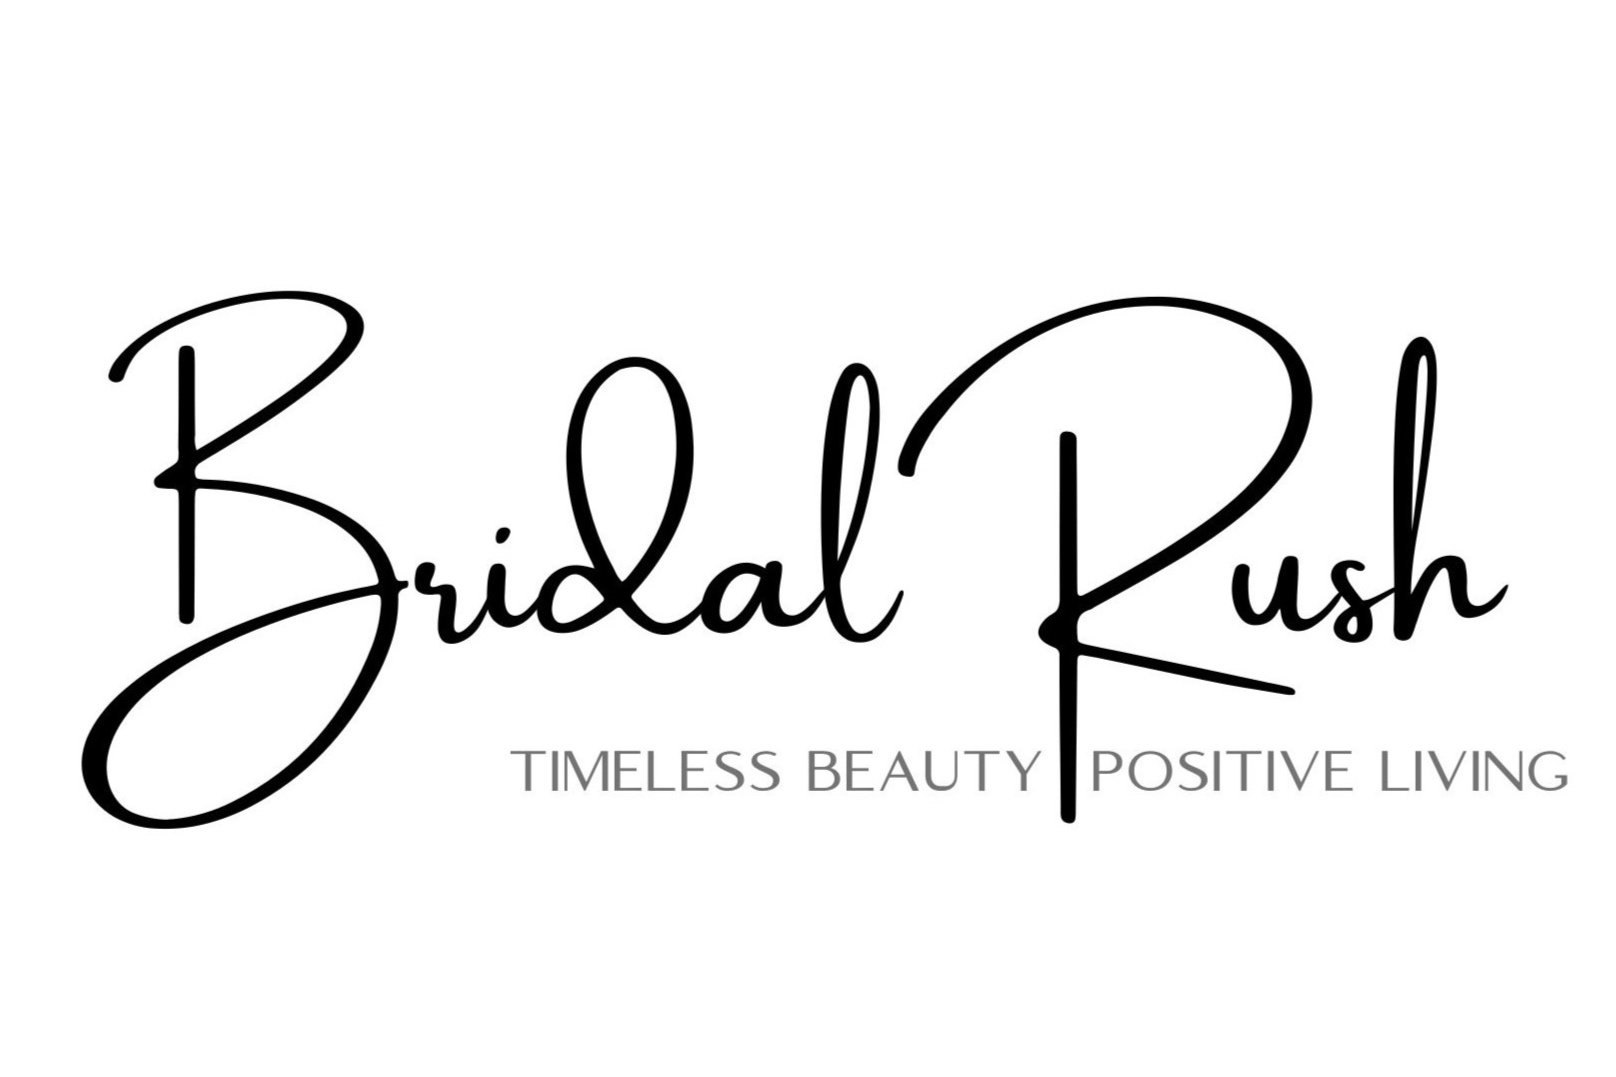 Bridal Rush